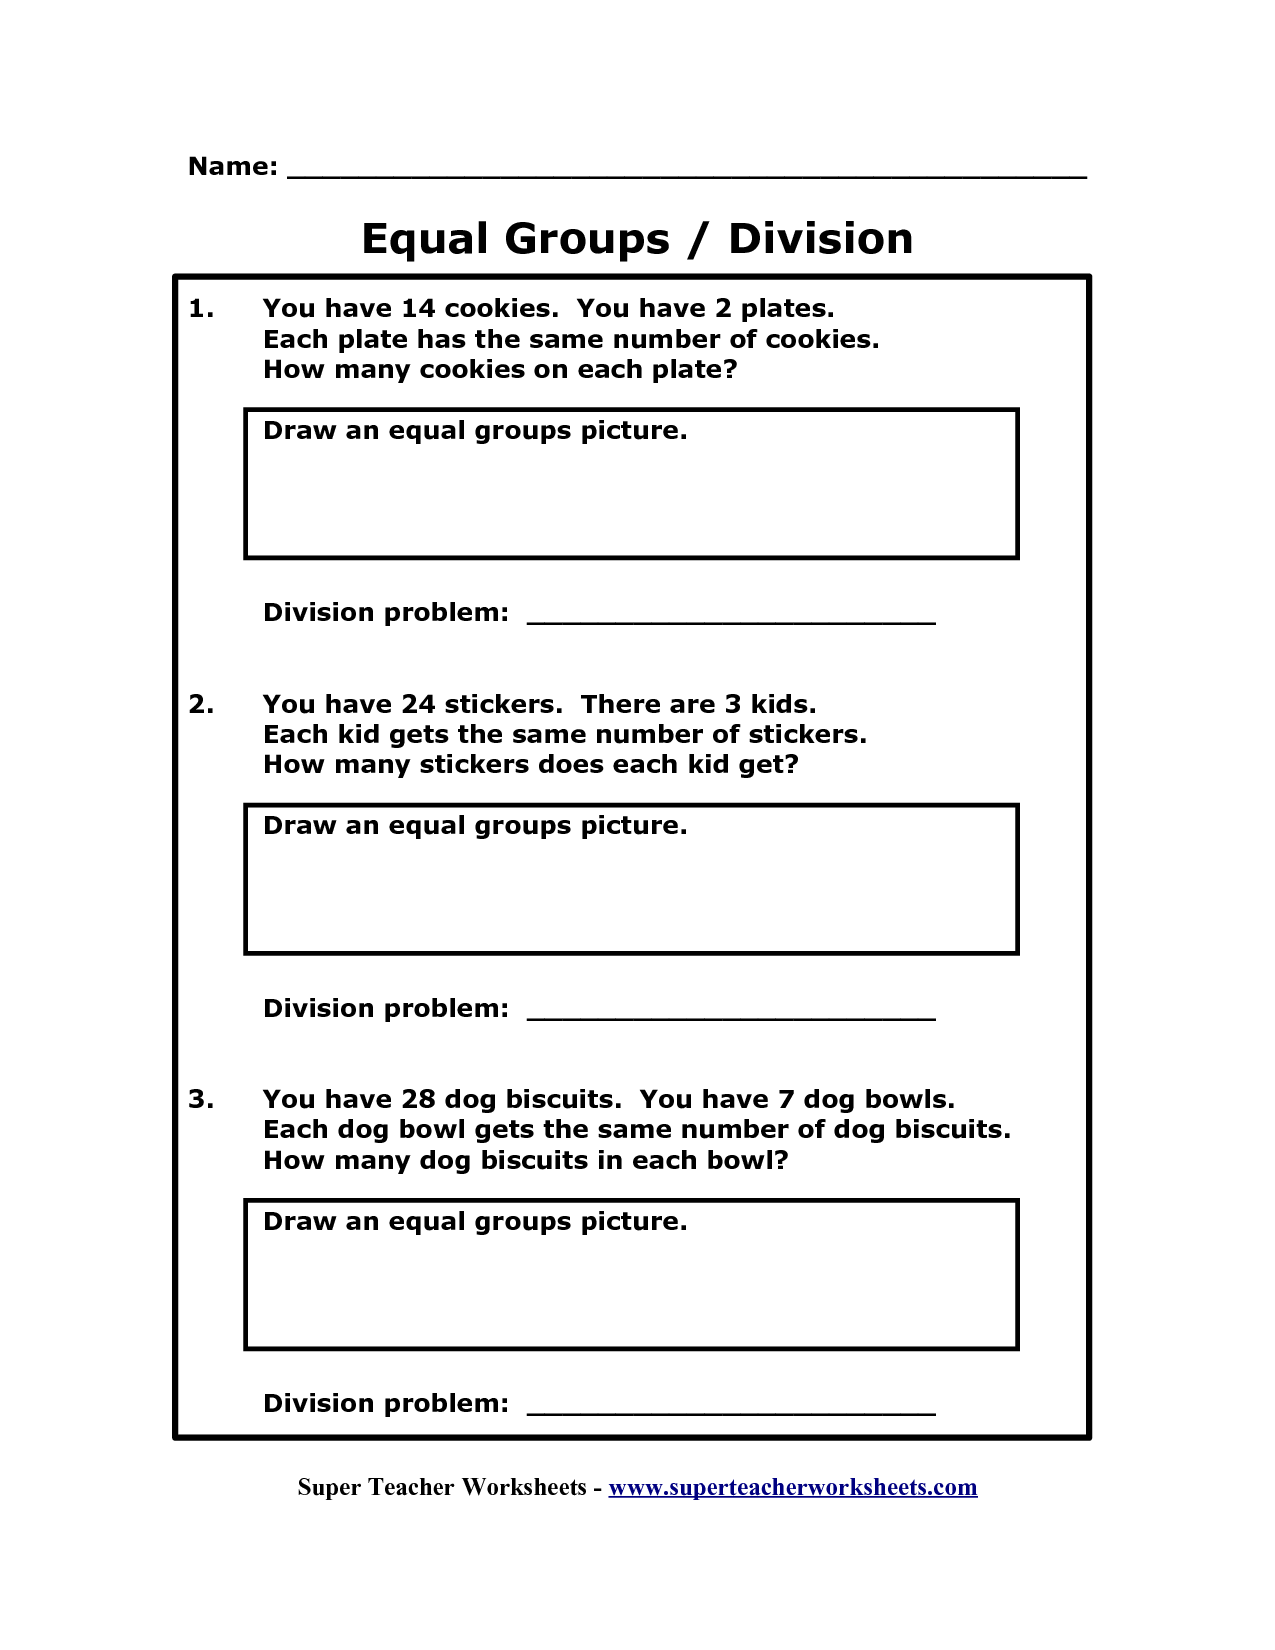 Equal groups math worksheets